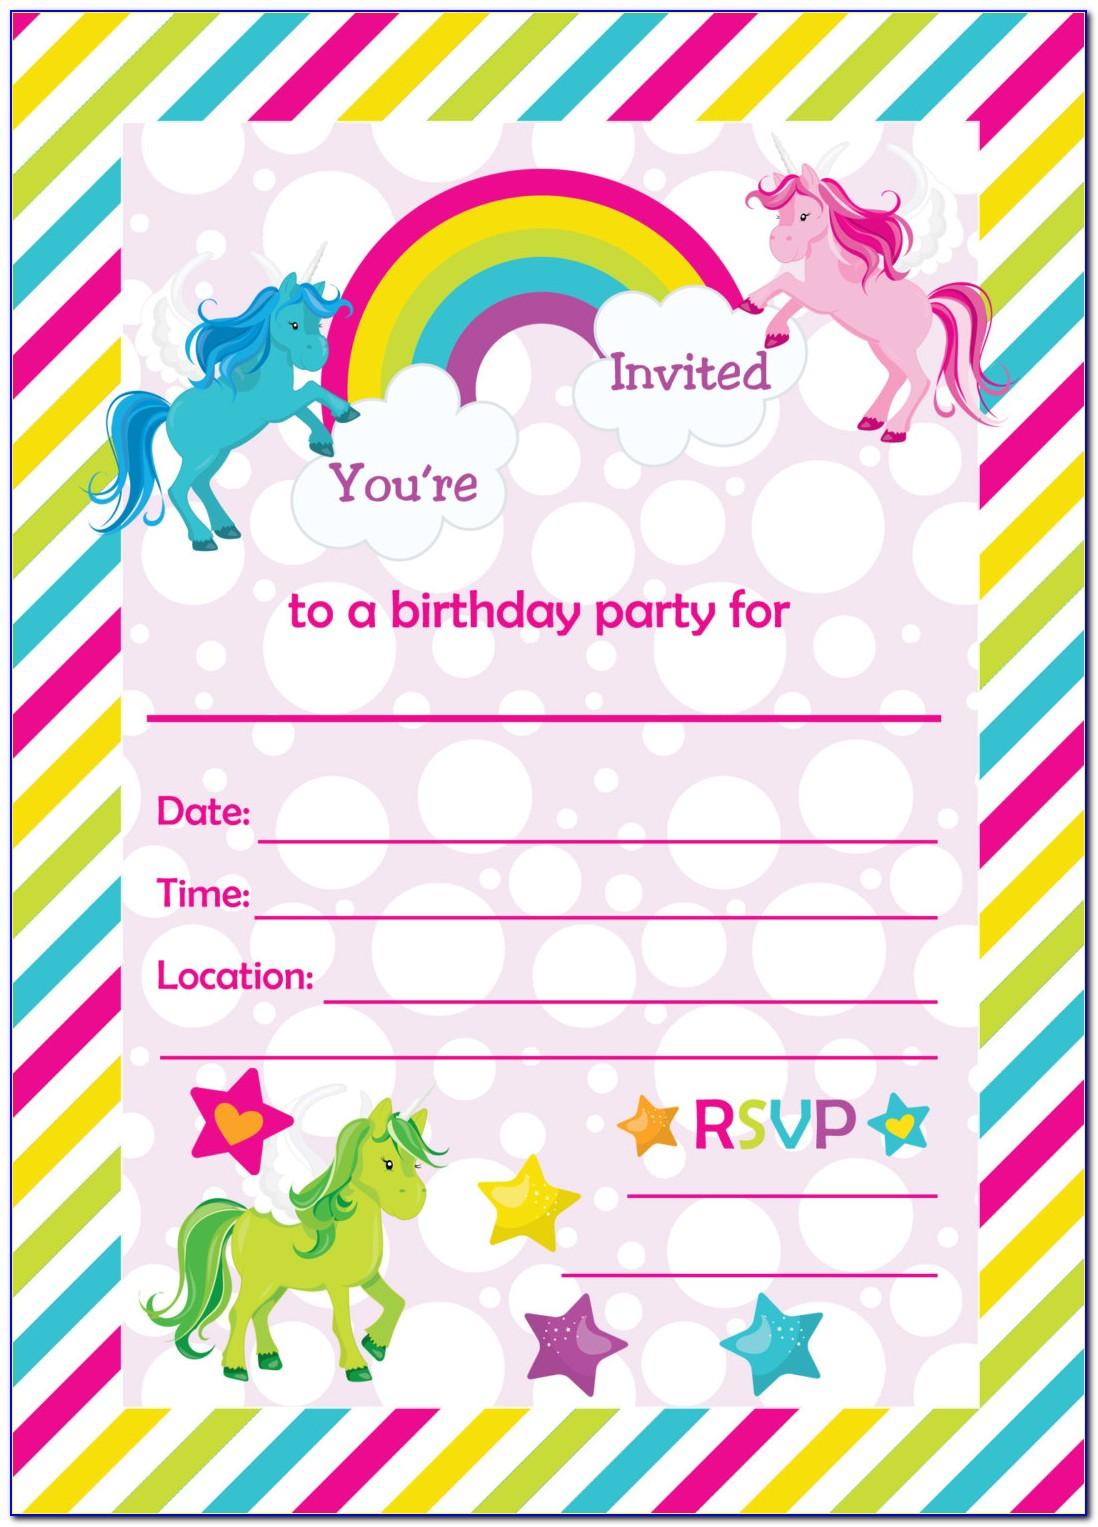 Free Birthday Invitation Templates To Print At Home